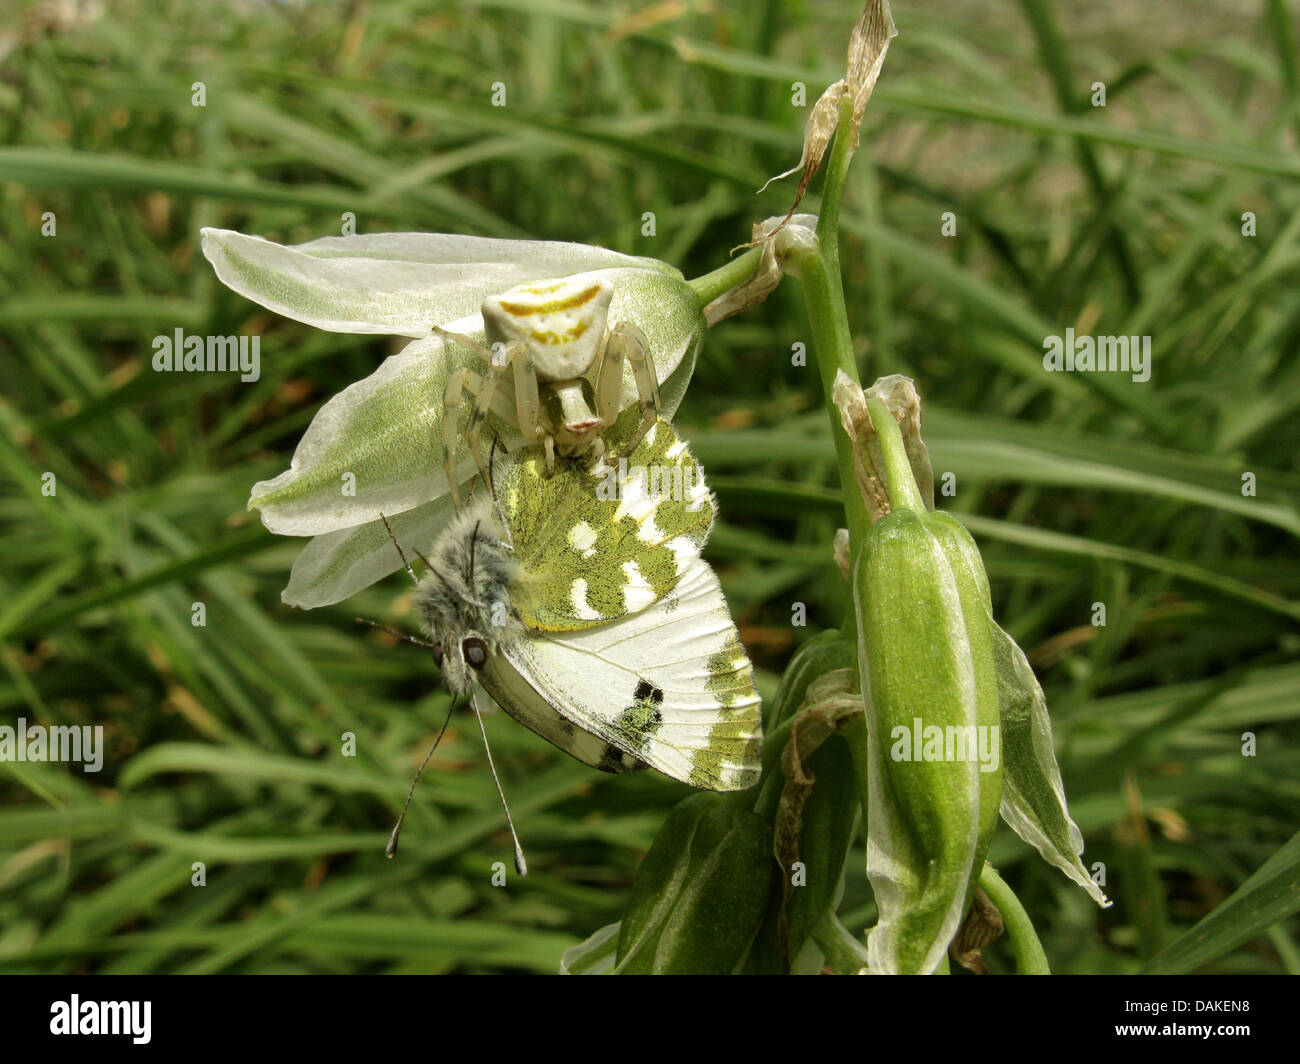 bath white (Pontia daplidice), drooping star-of-bethlehem, Ornithogalum nutans, Greece, Peloponnese Stock Photo